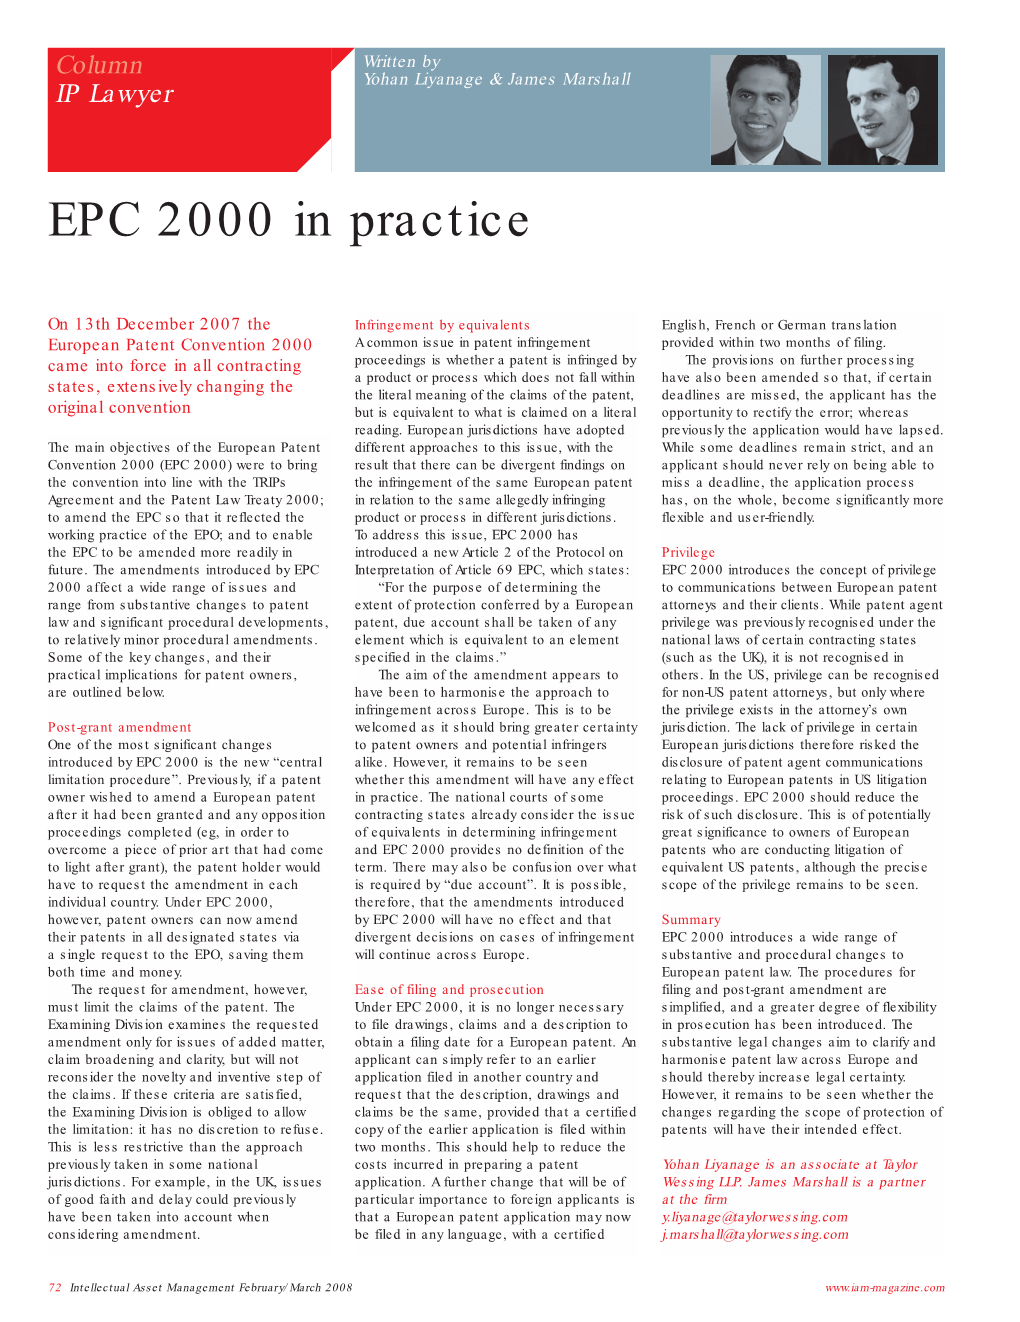 EPC 2000 in Practice